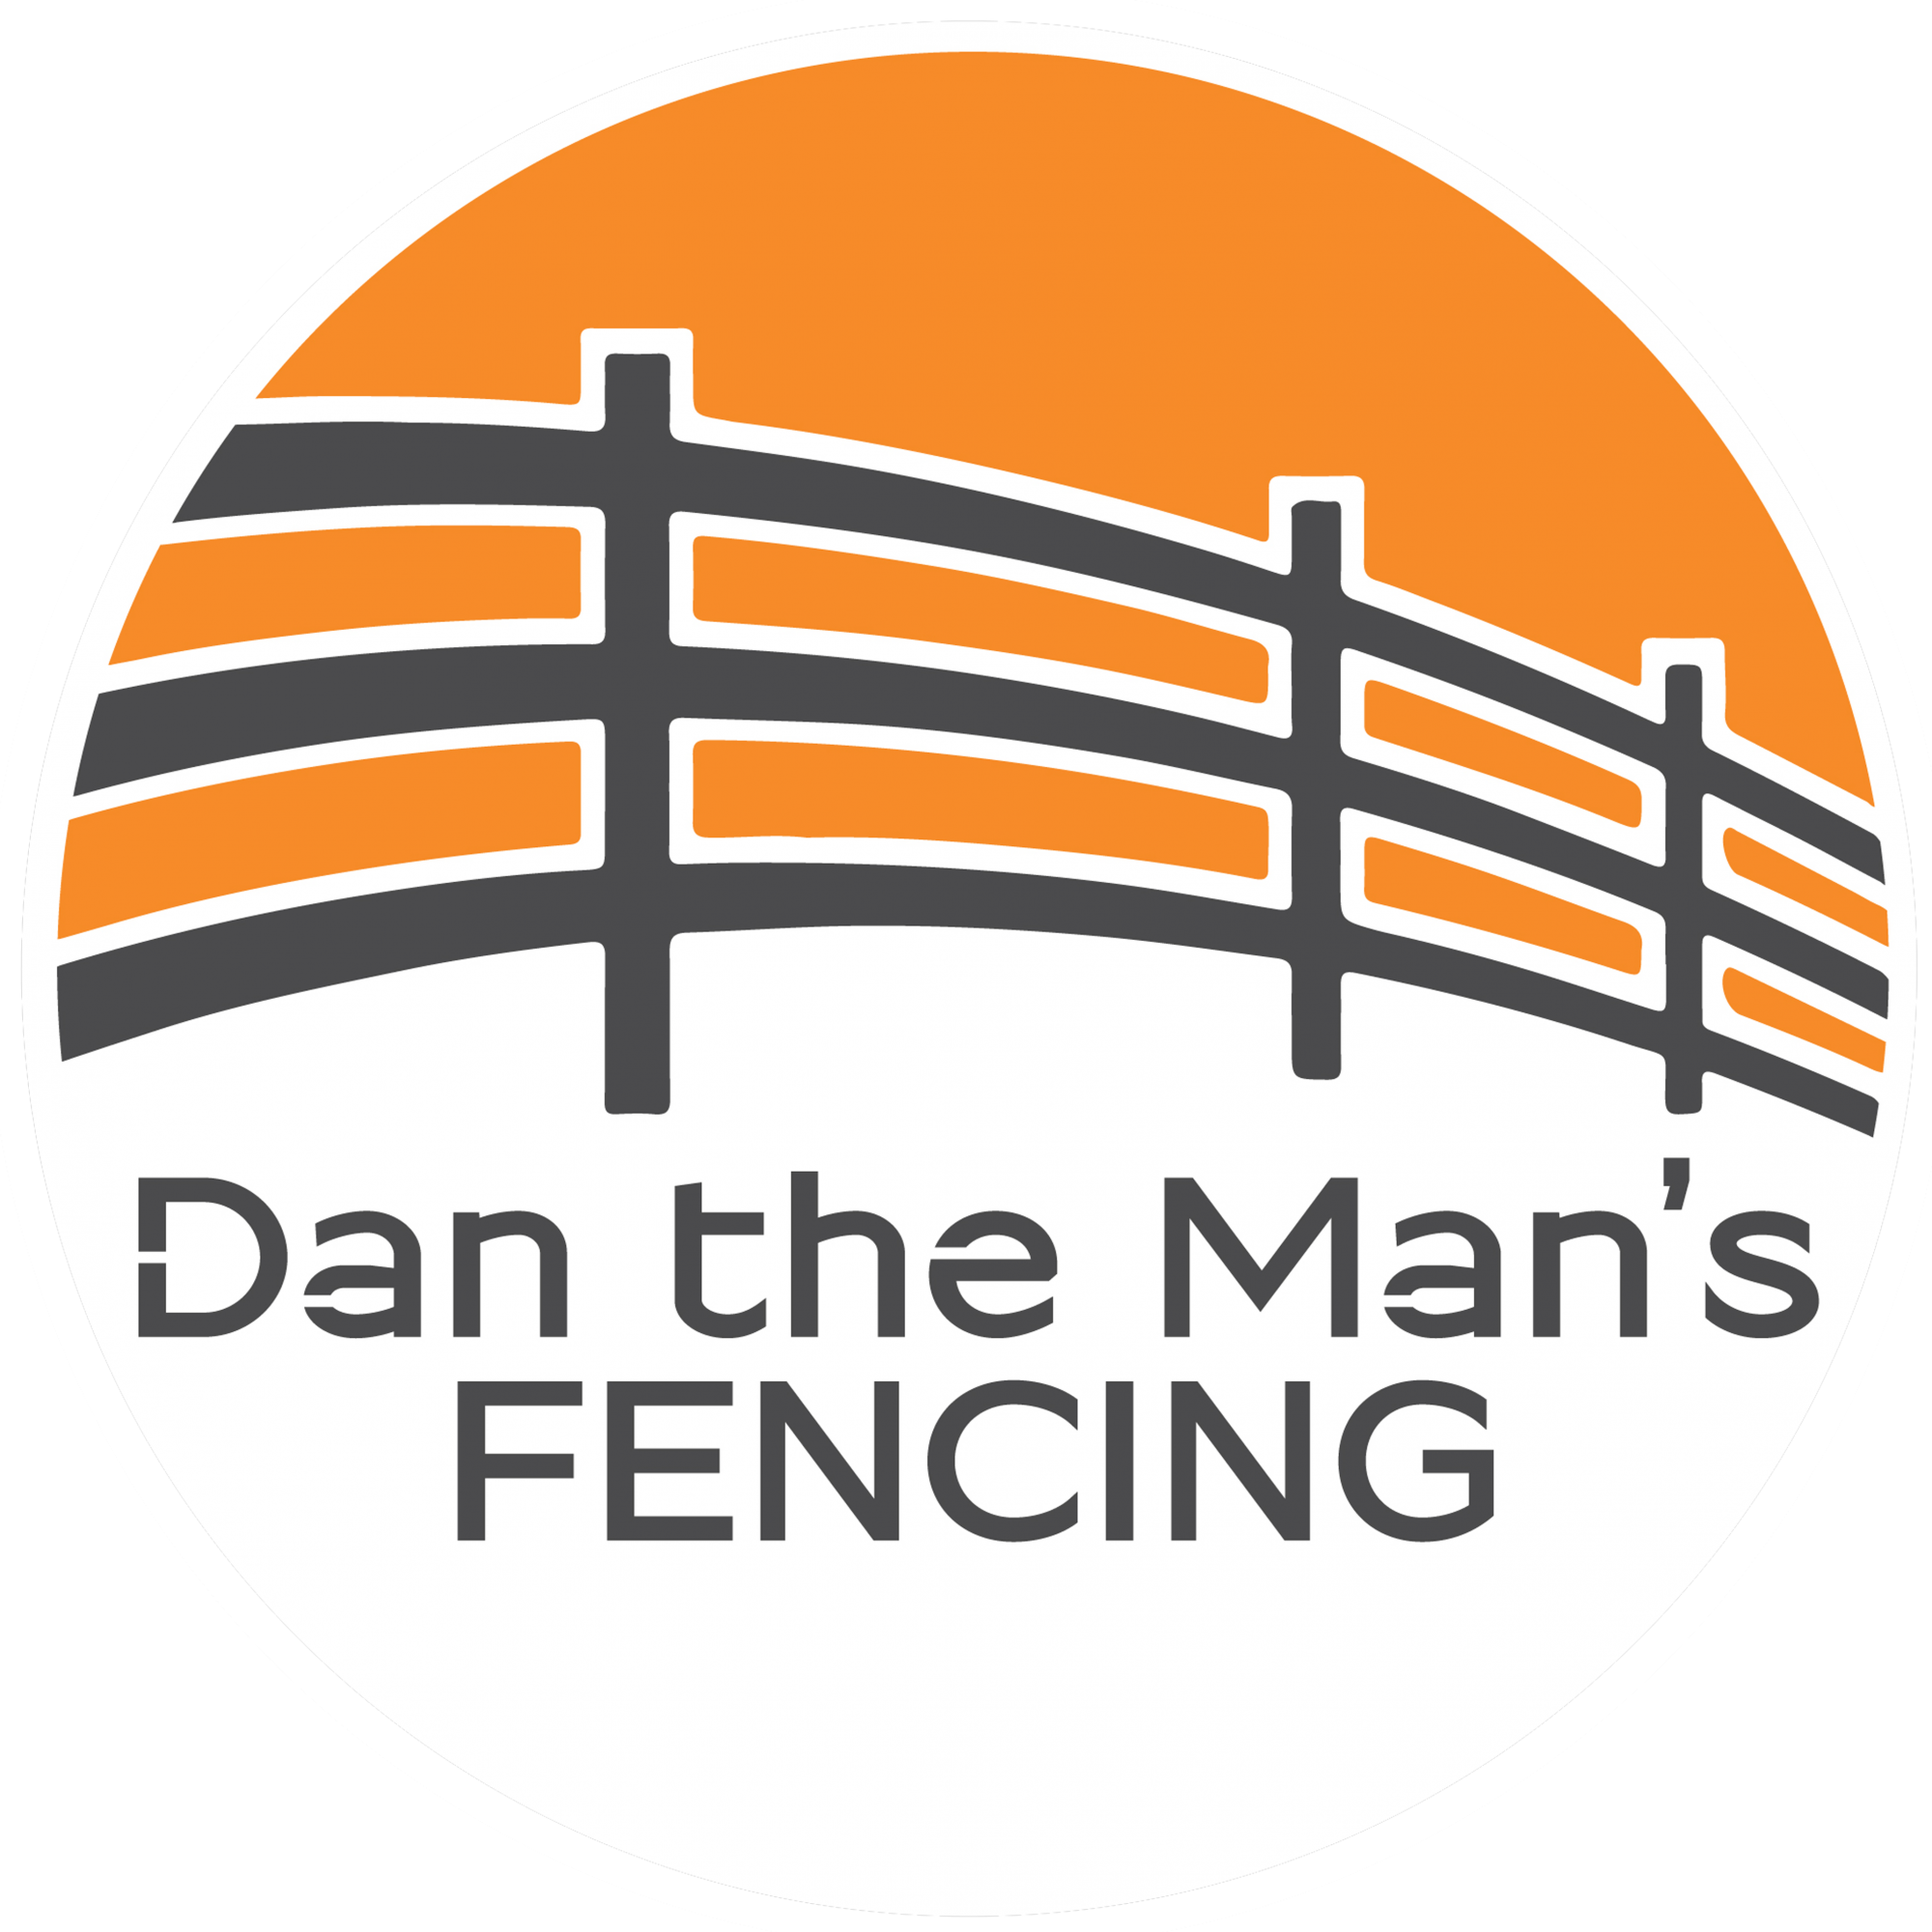 DAN THE MAN'S FENCING - 0412 300 058